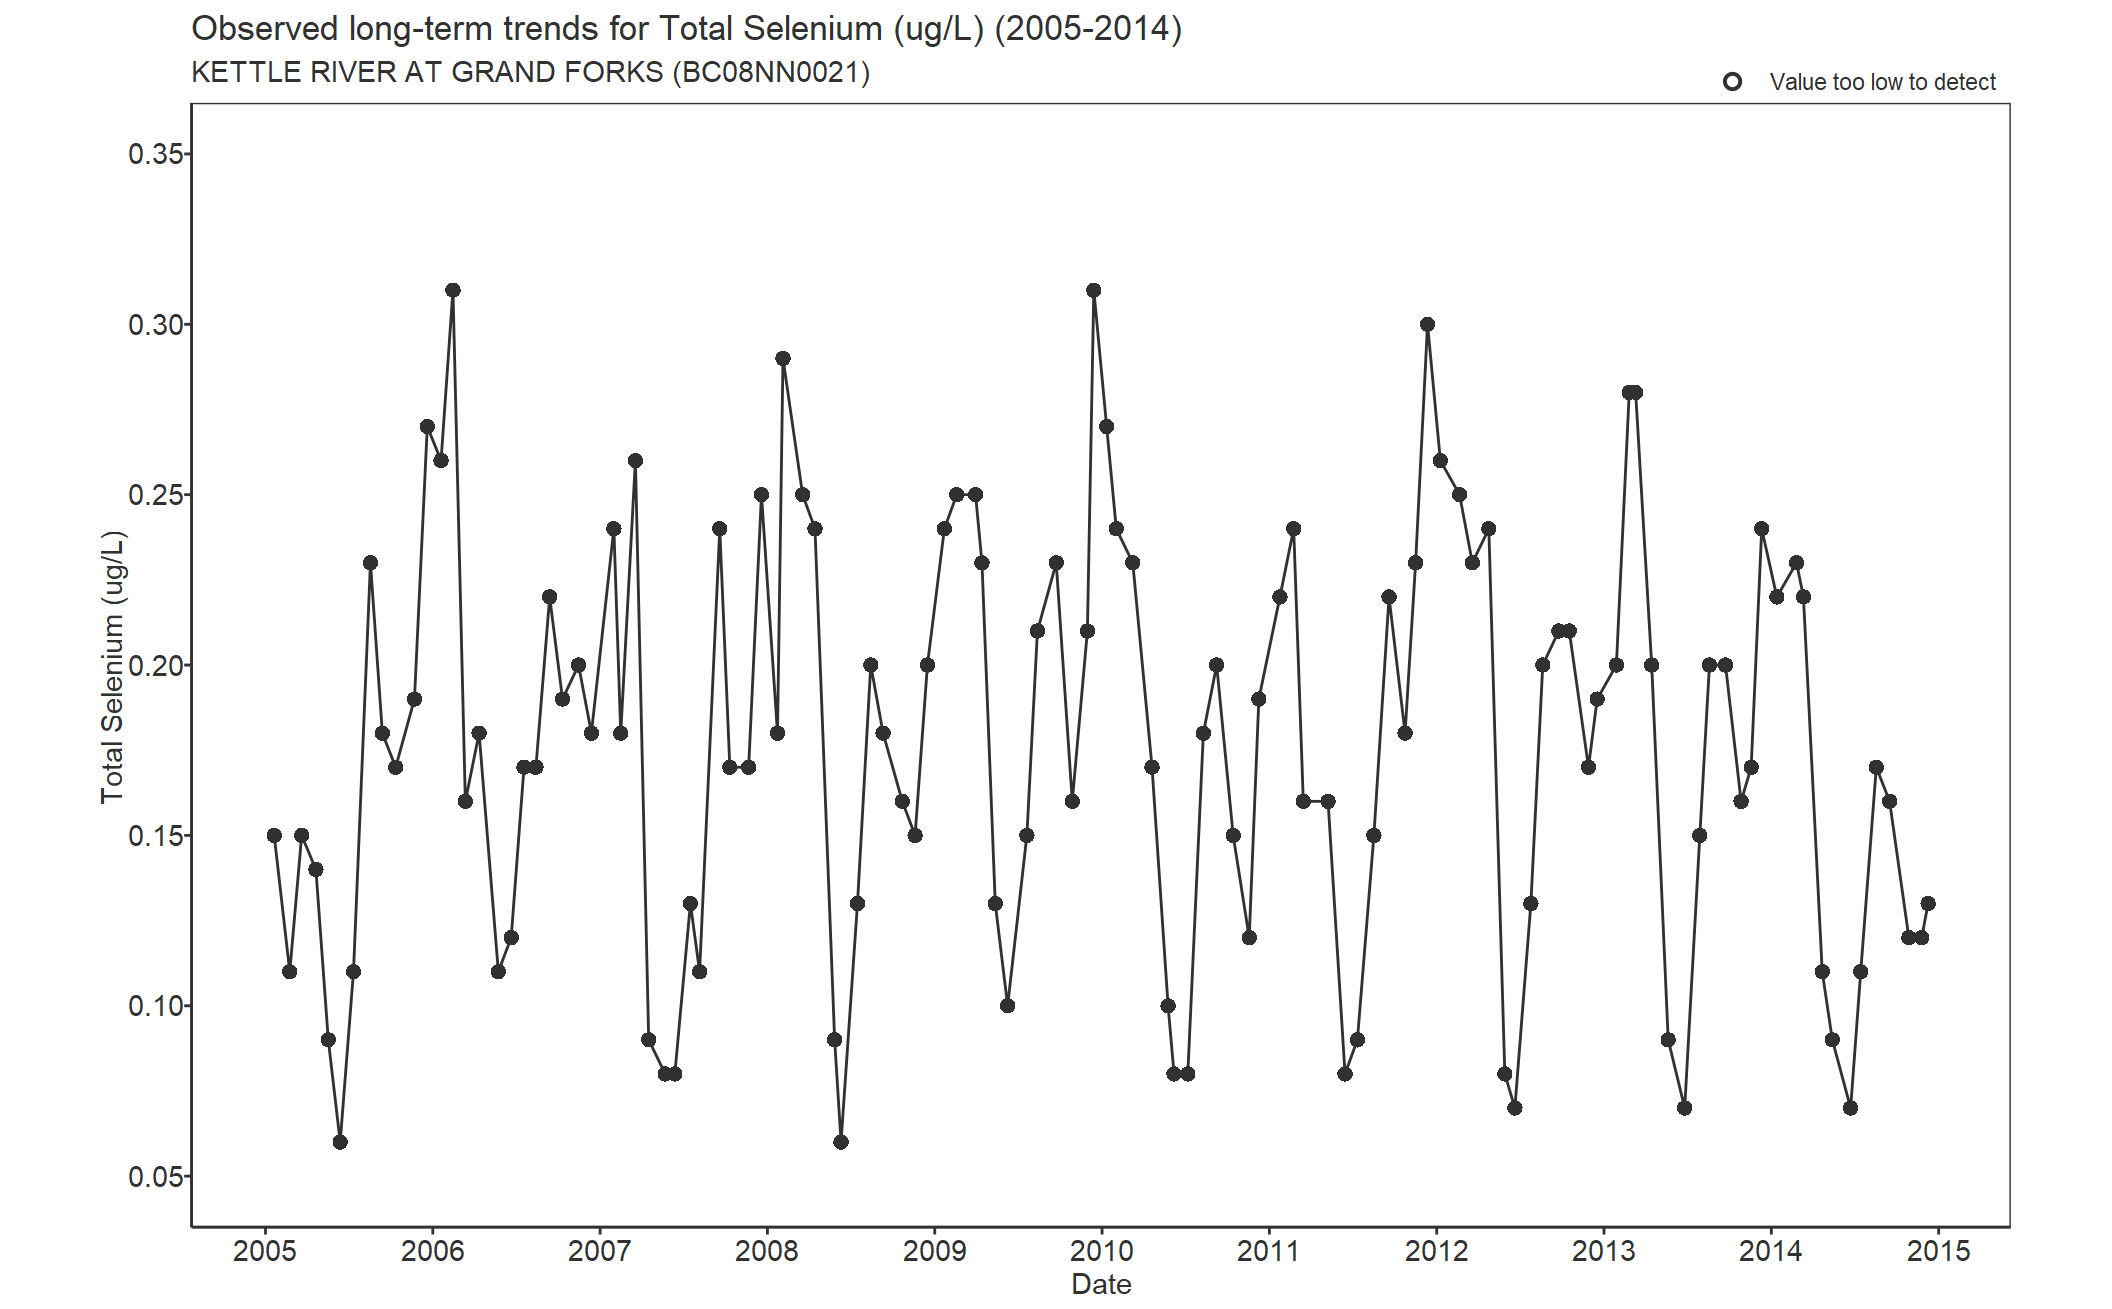 Observed long-term trends for Selenium Total (2005-2014)